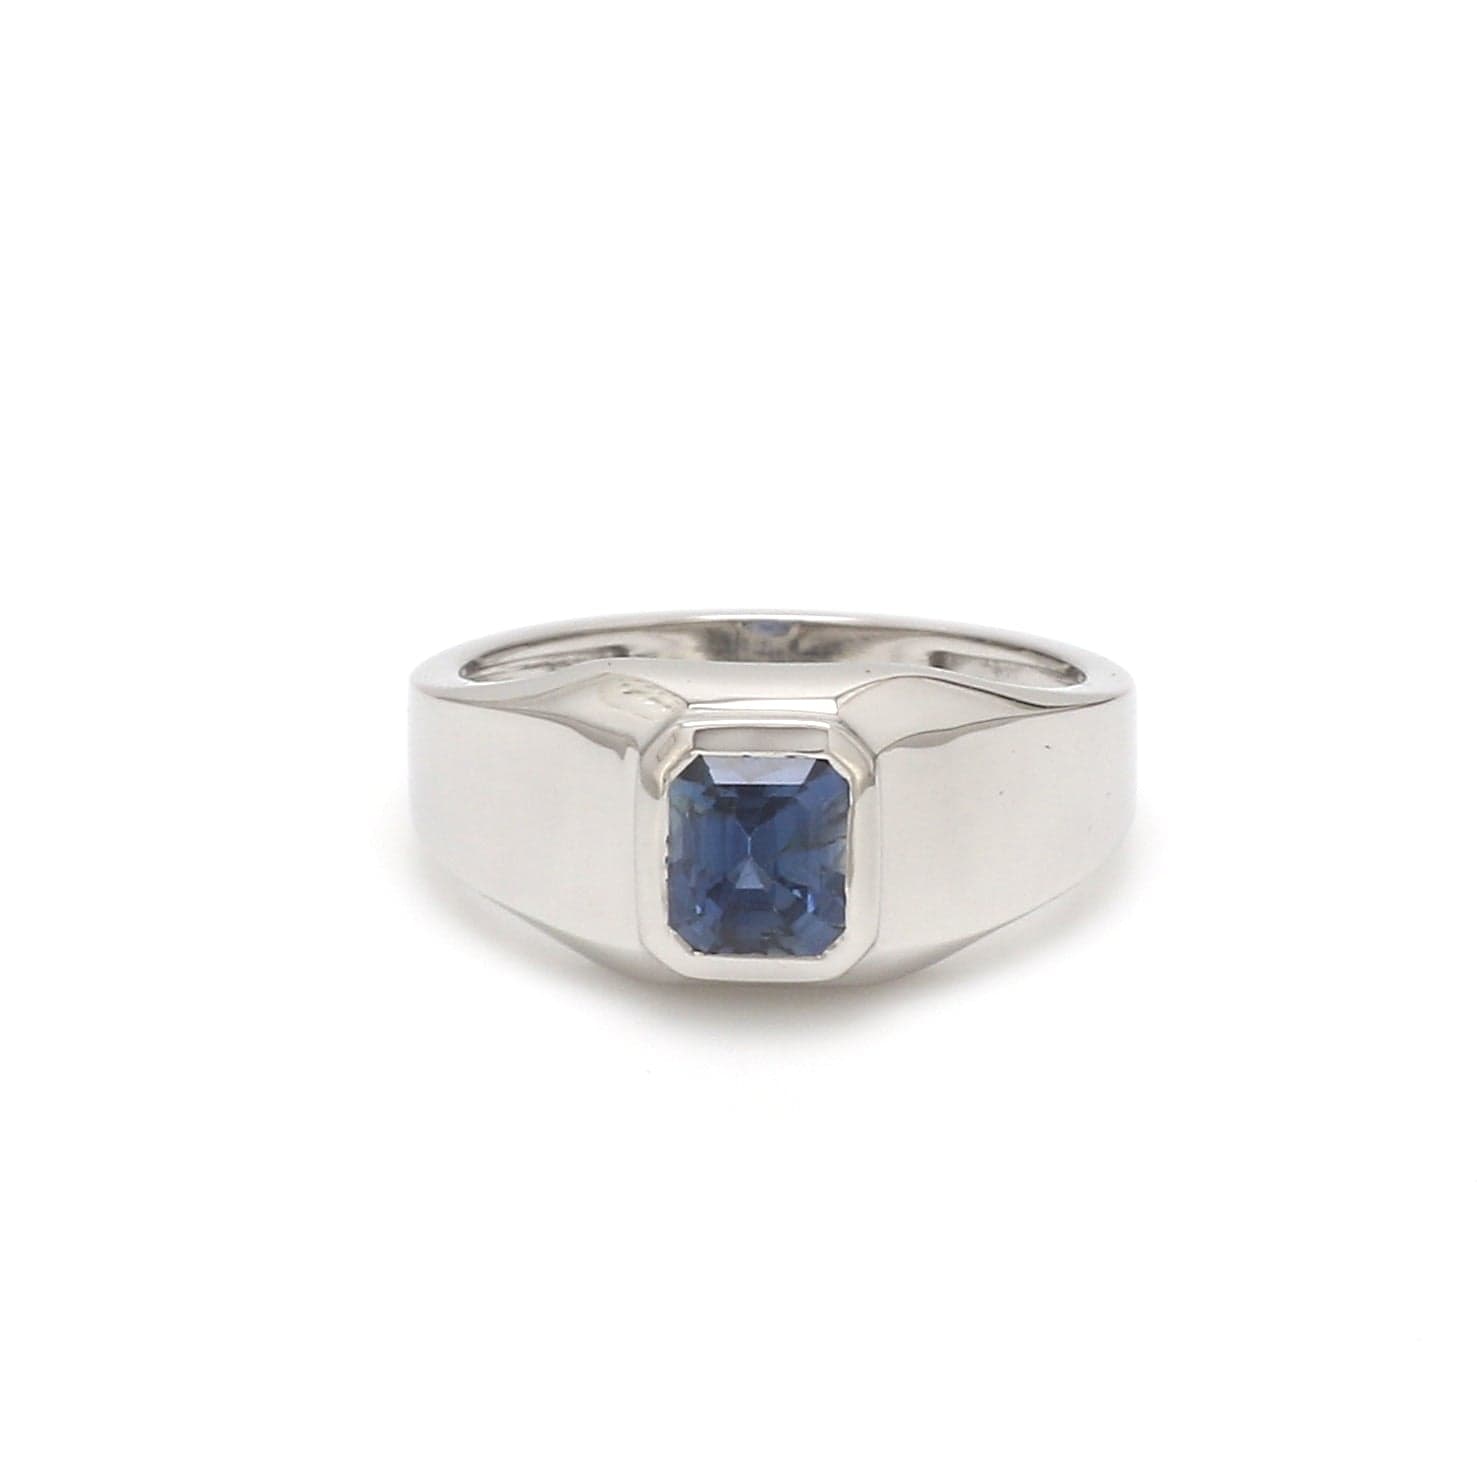 1.75 Carat Sapphire Engagement Ring, Cushion Cut Bridal Ring, Solitaire  Engagement Ring, 14K White Gold Unique Gallery Design handmade